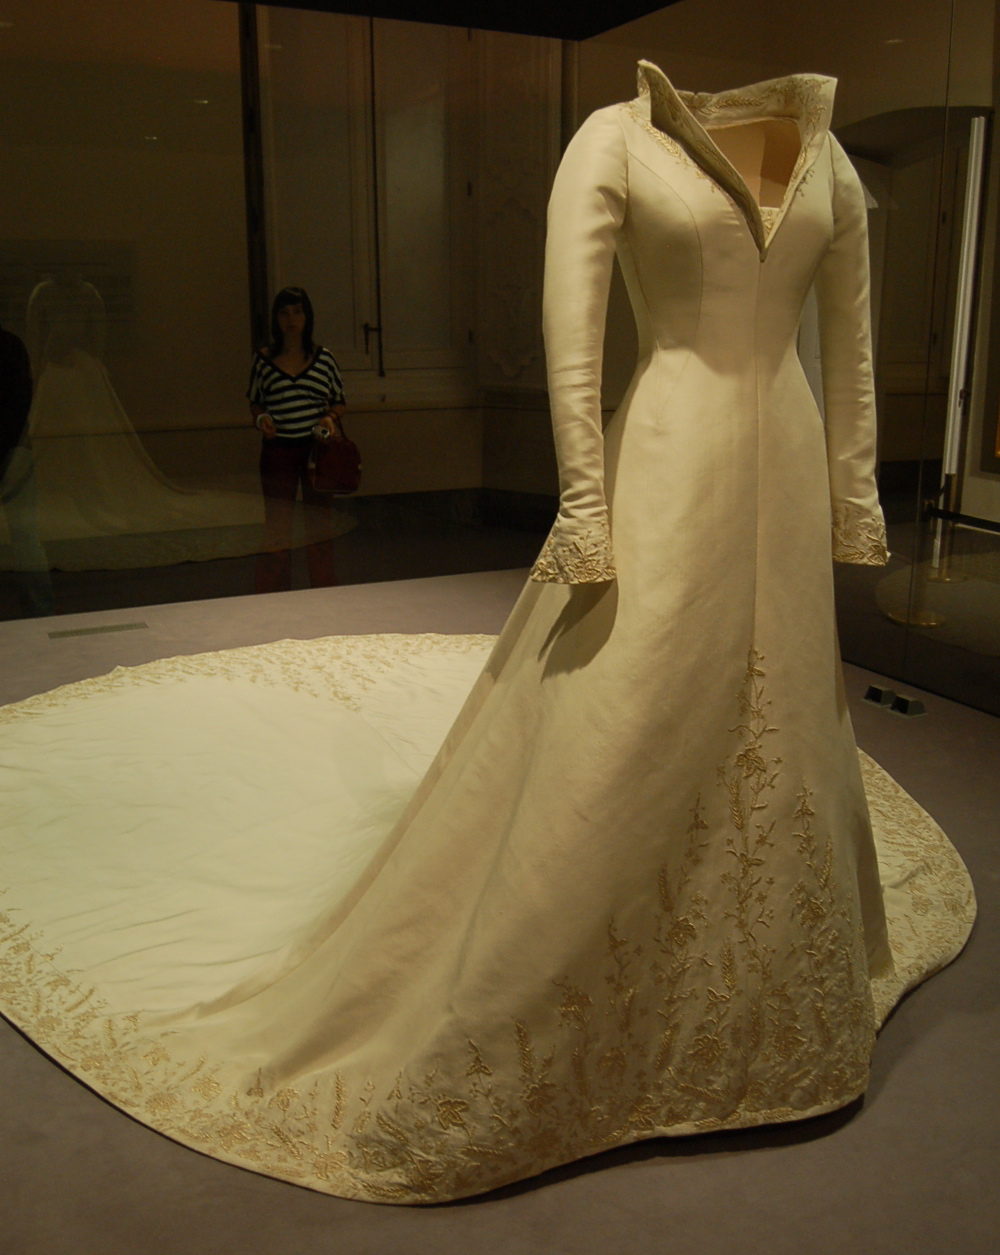 Fashion exhibitions: the wedding dress of Queen Letizia - Replicate Royalty